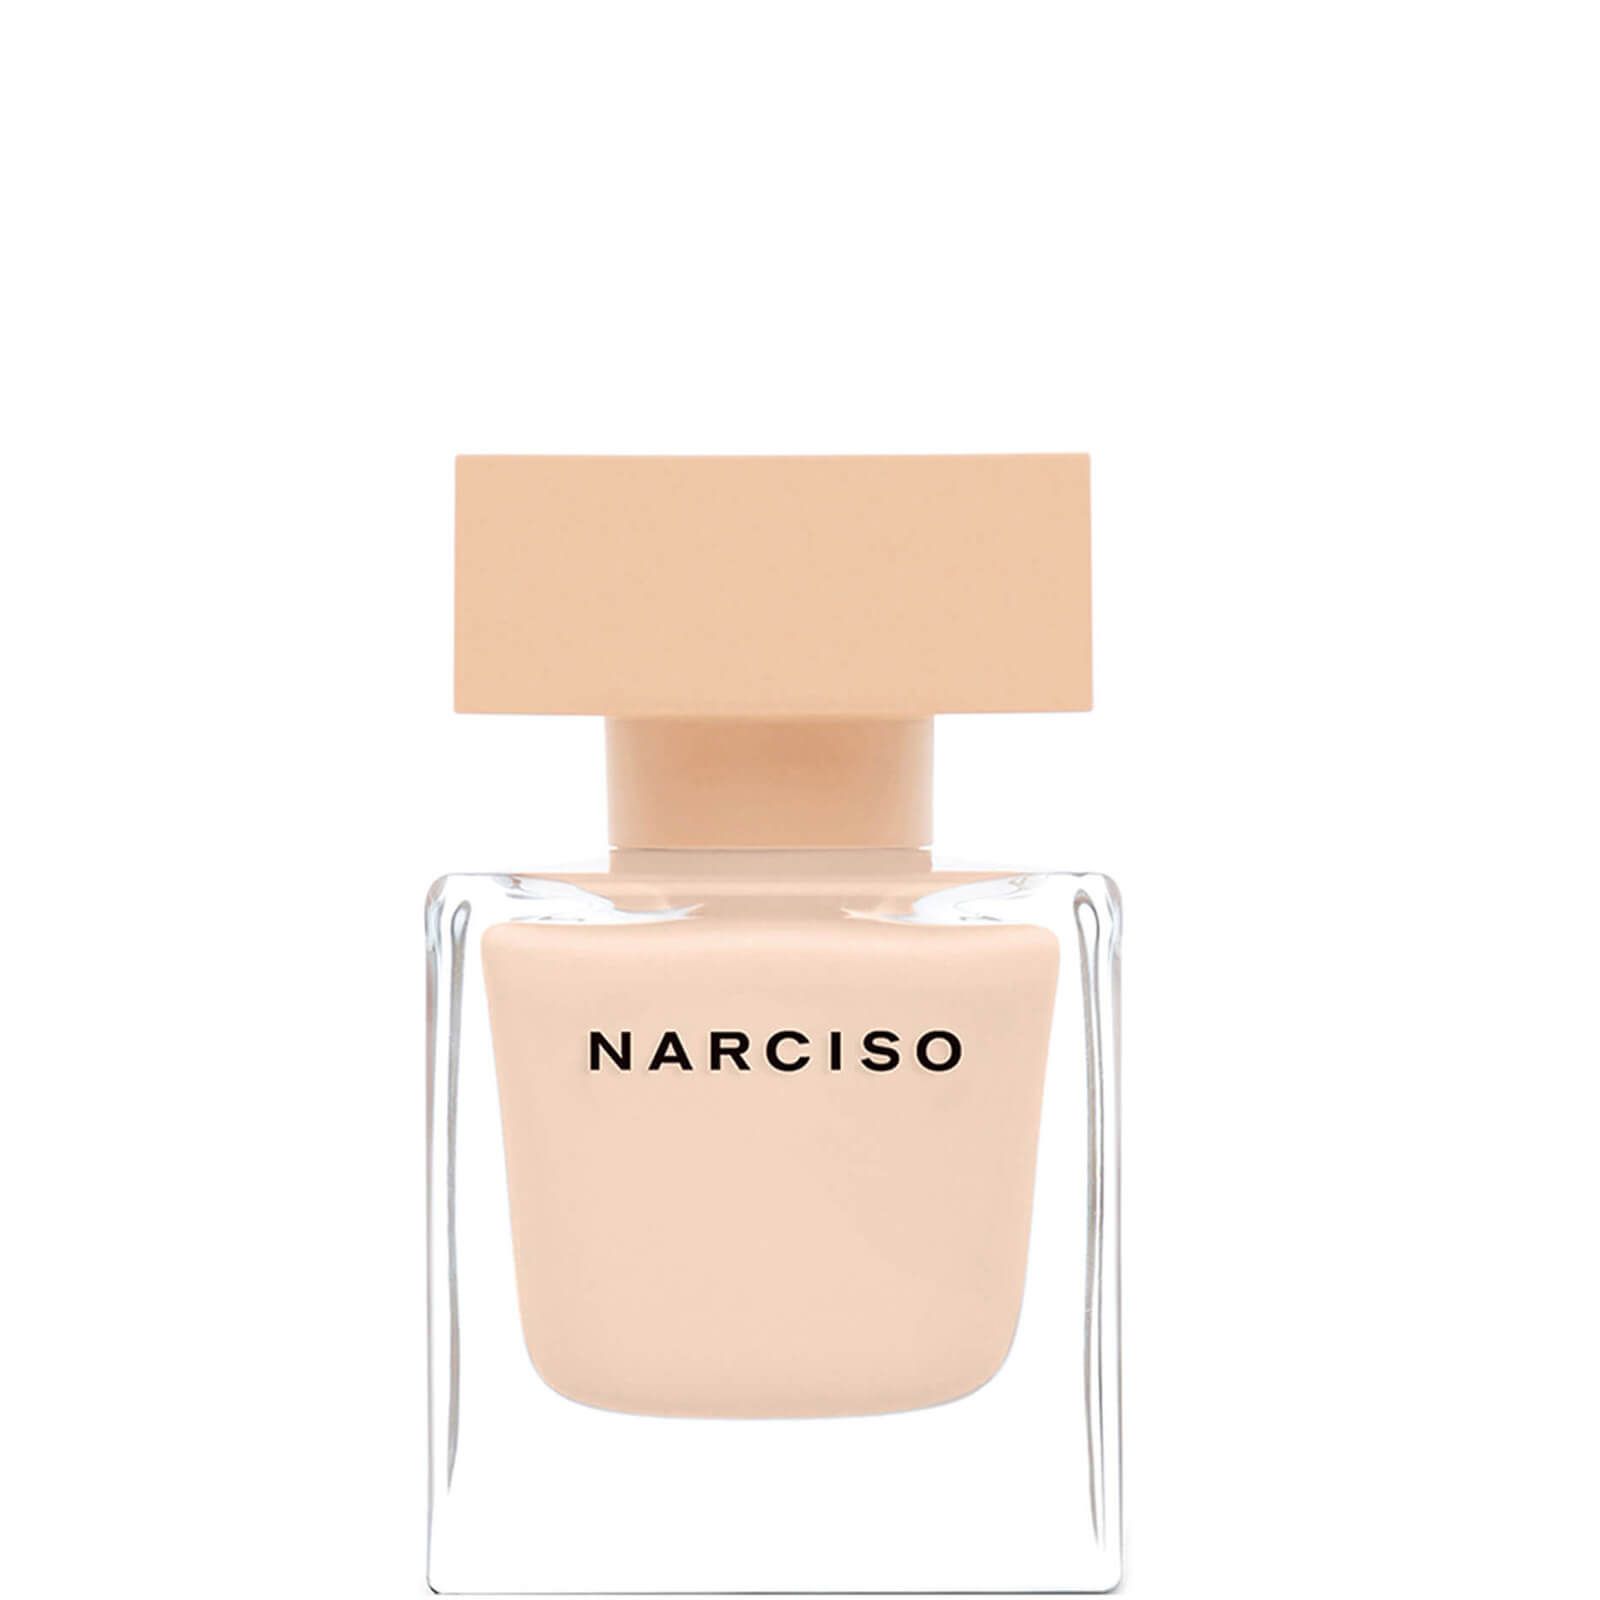 Нарциссо родригес женский парфюм